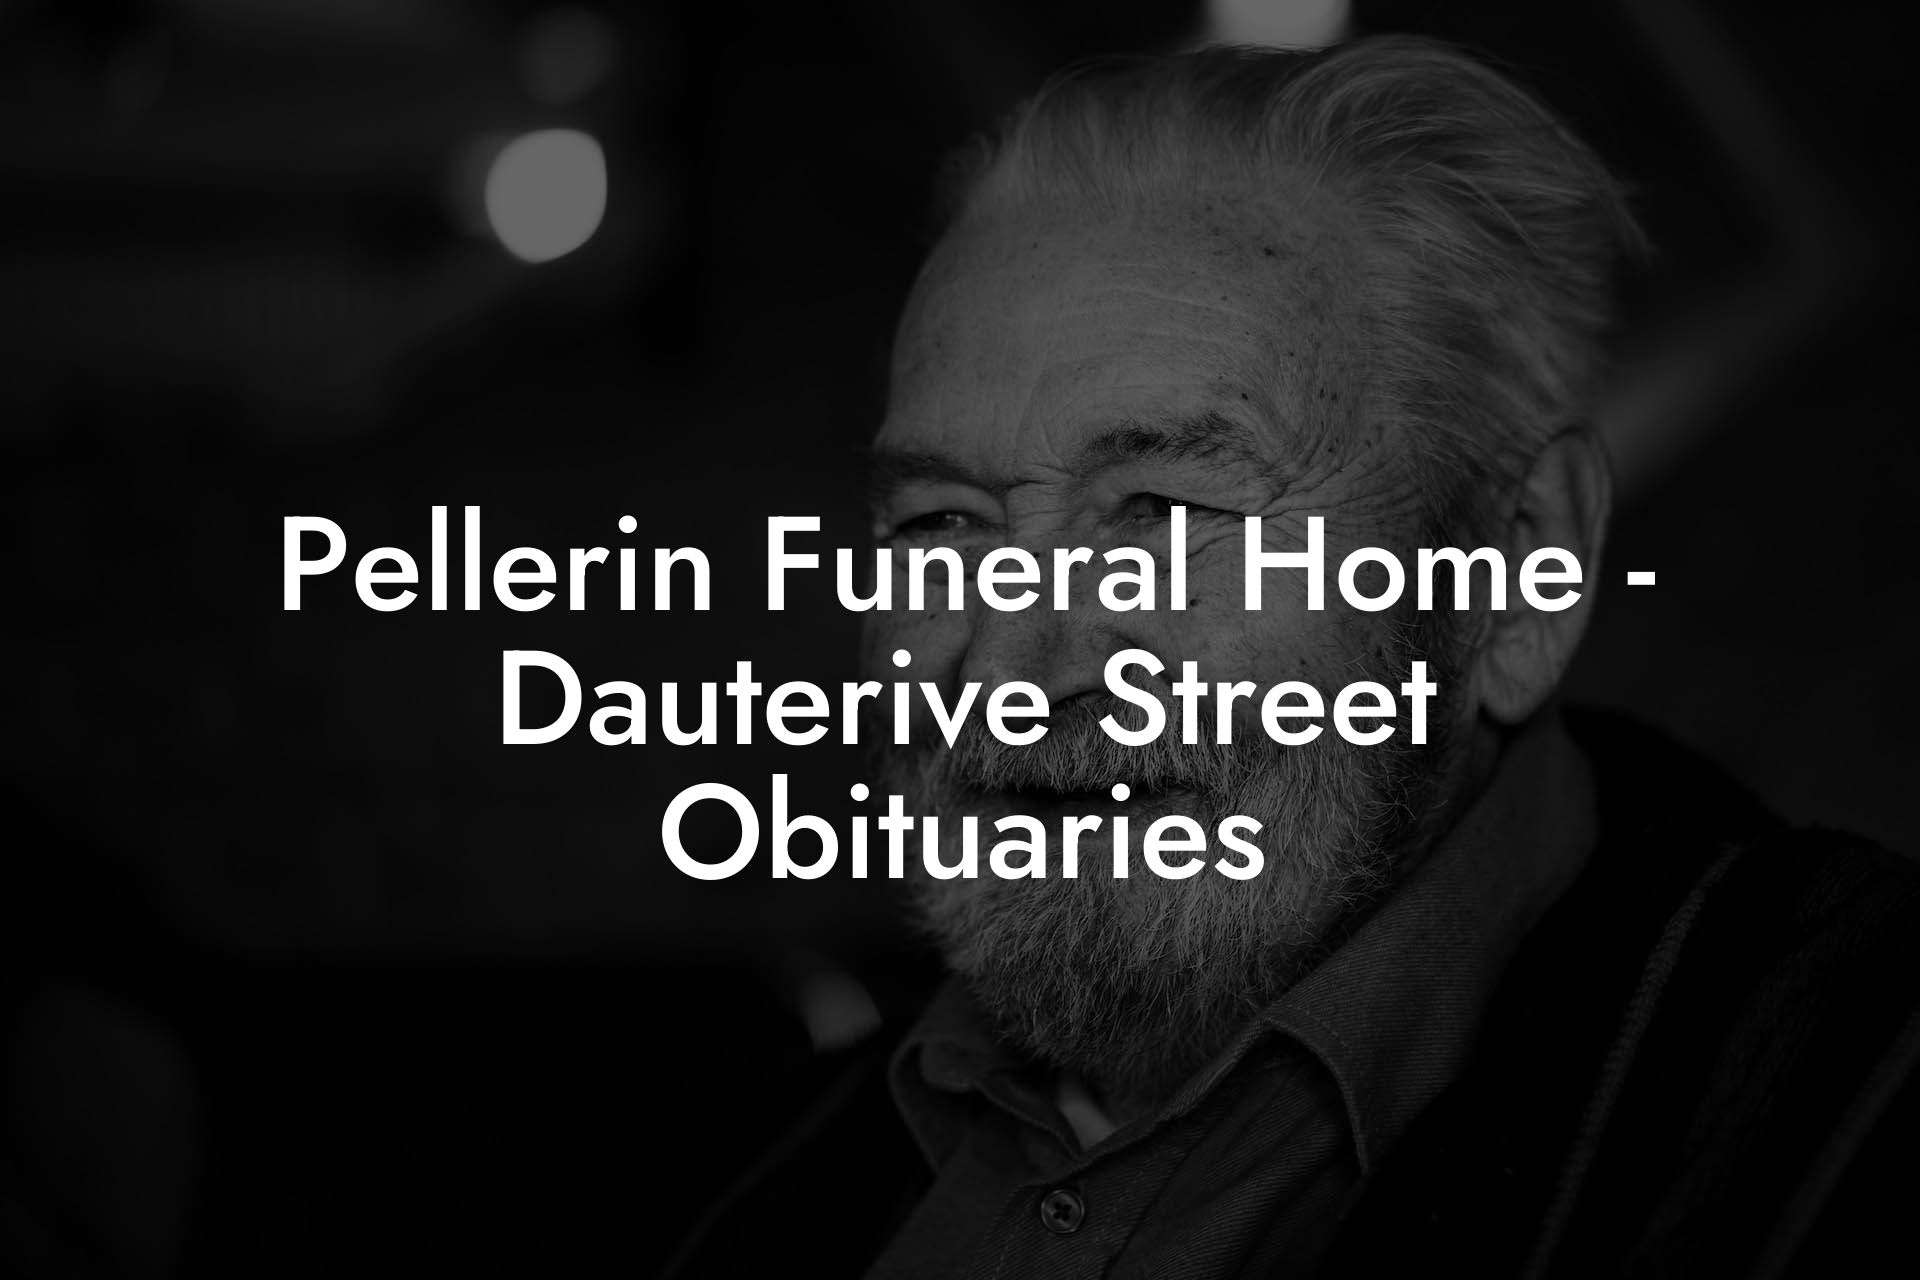 Pellerin Funeral Home - Dauterive Street Obituaries